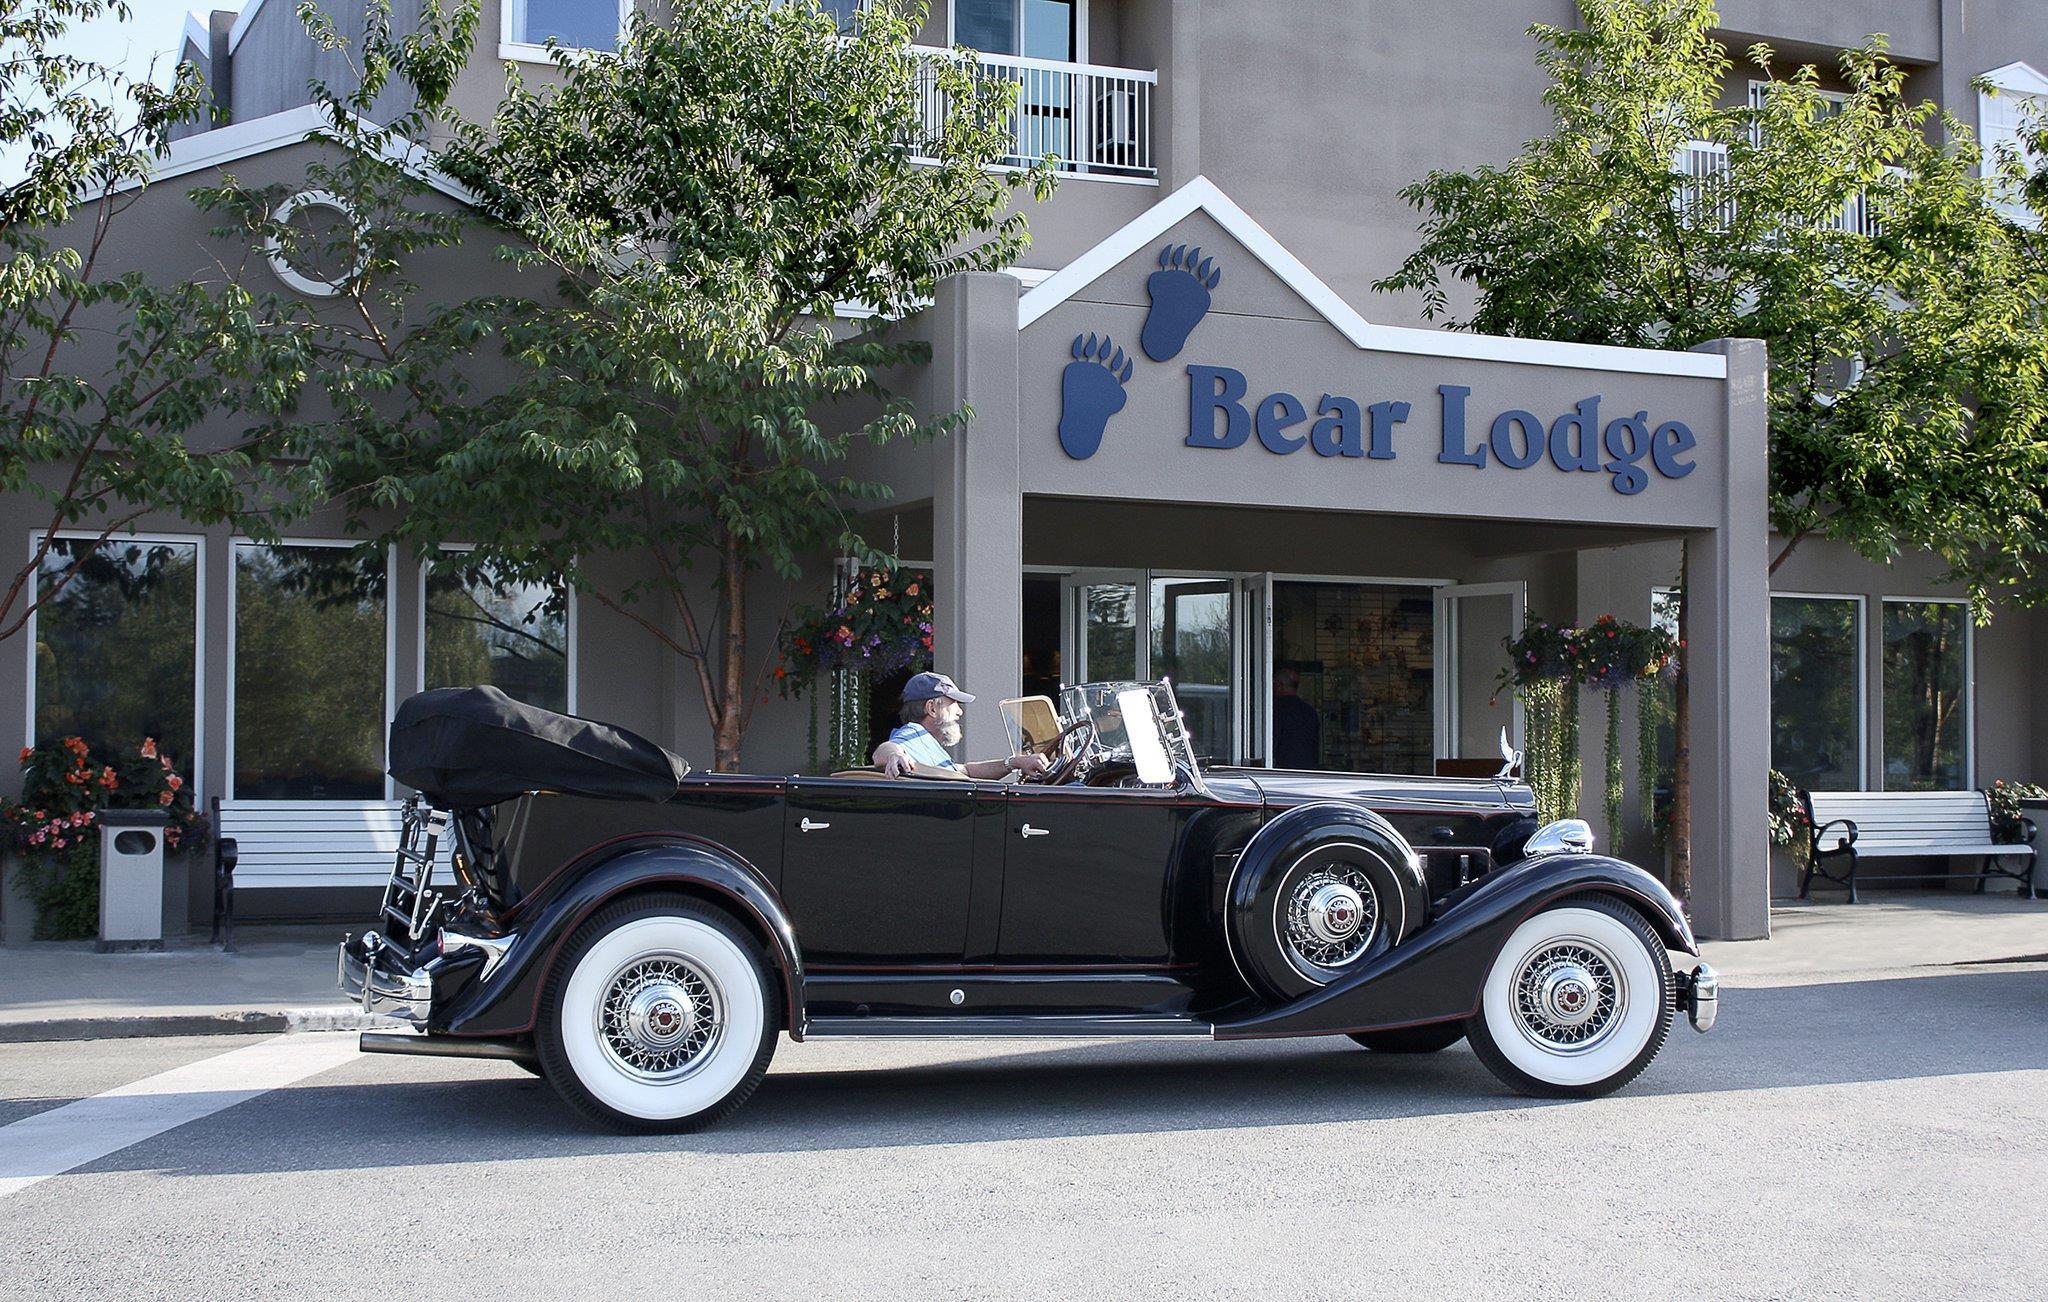 Bear Lodge at Wedgewood Resort